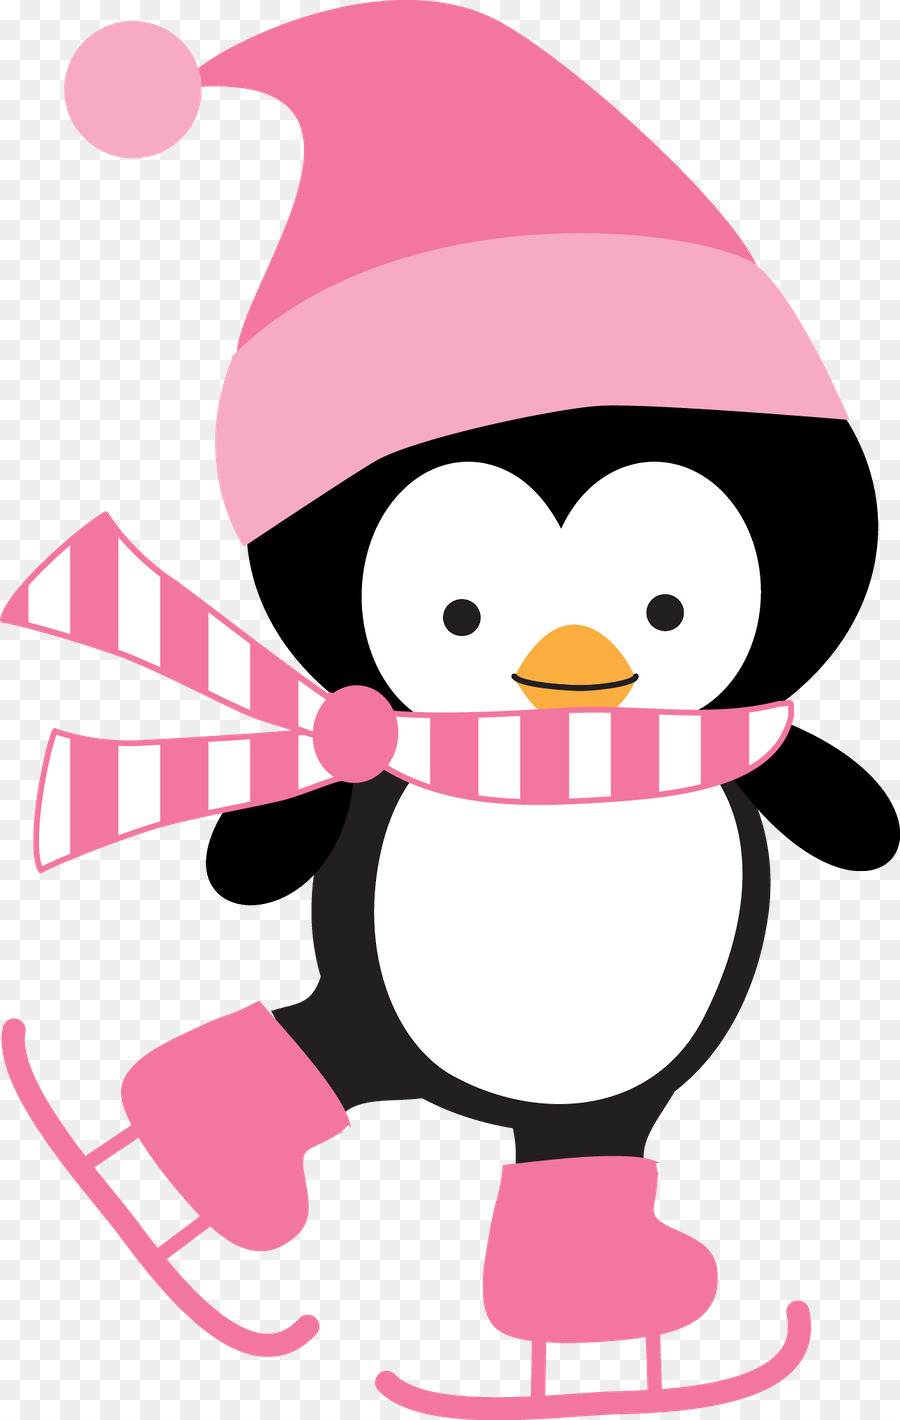 Pinguino Computer Icone clipart - Pinguino